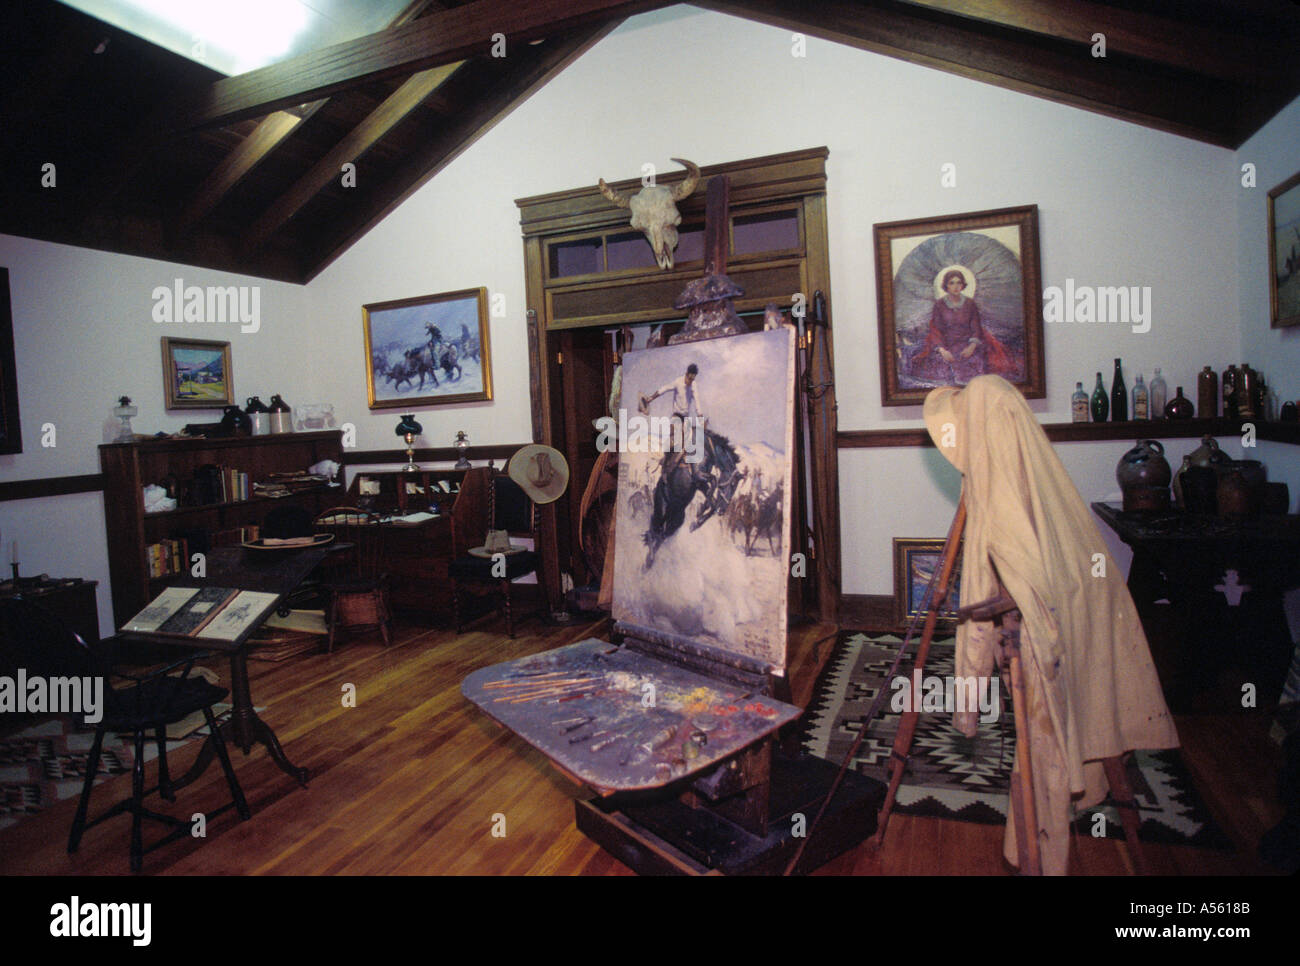 Wyoming Cody Buffalo Bill Historical Center Whitney Gallery of Western Art réplique de W H D Koerner studio Banque D'Images